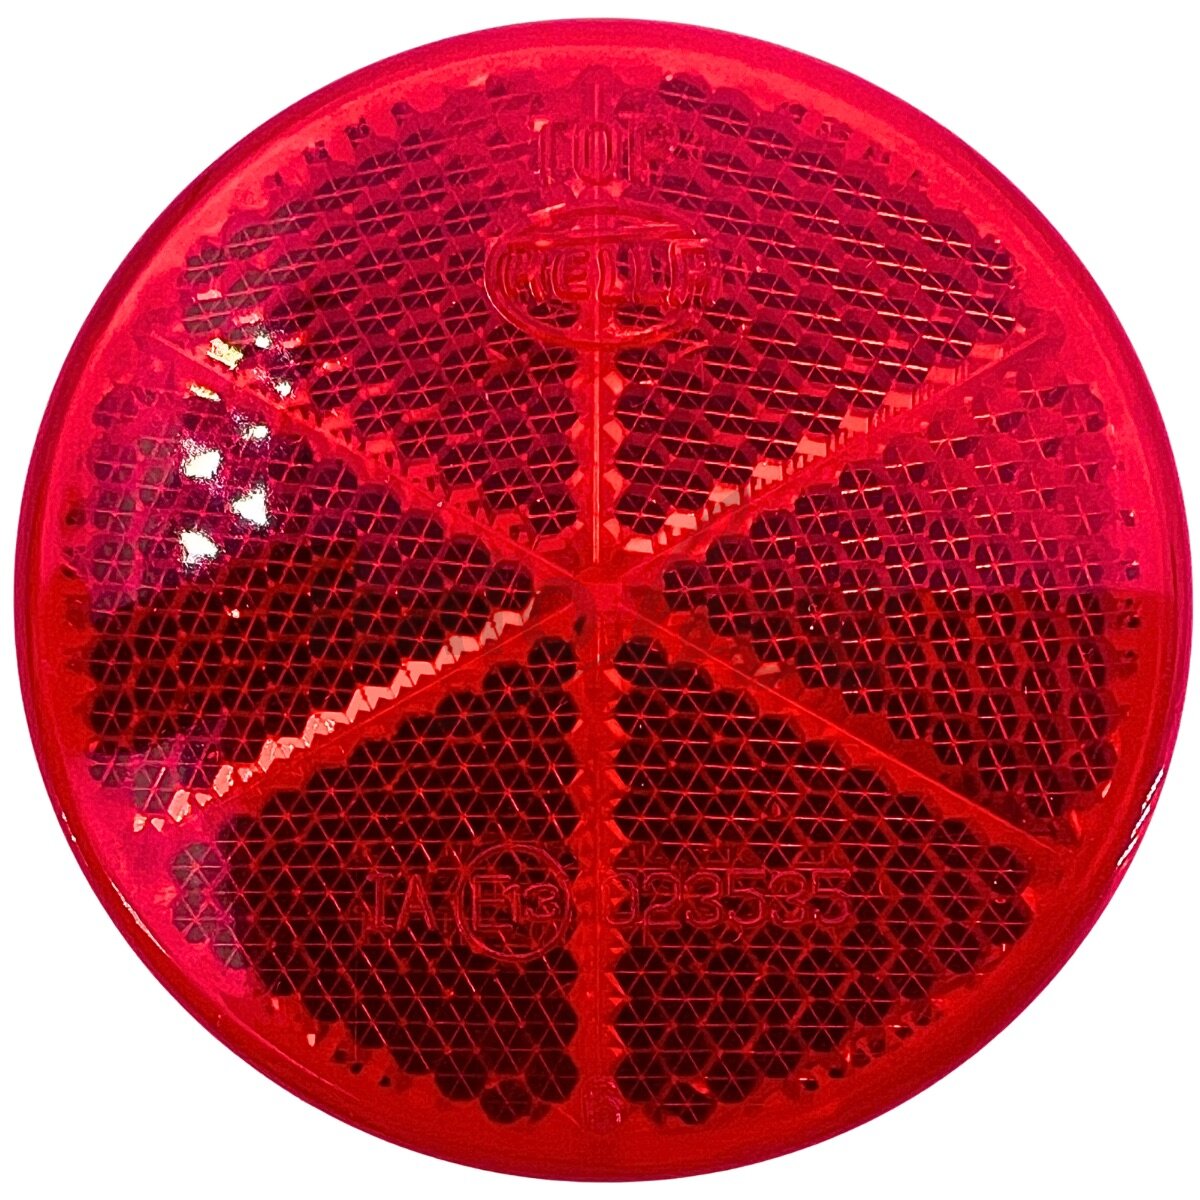 Reflektor rot 60mm selbstklebend, 1,95 €